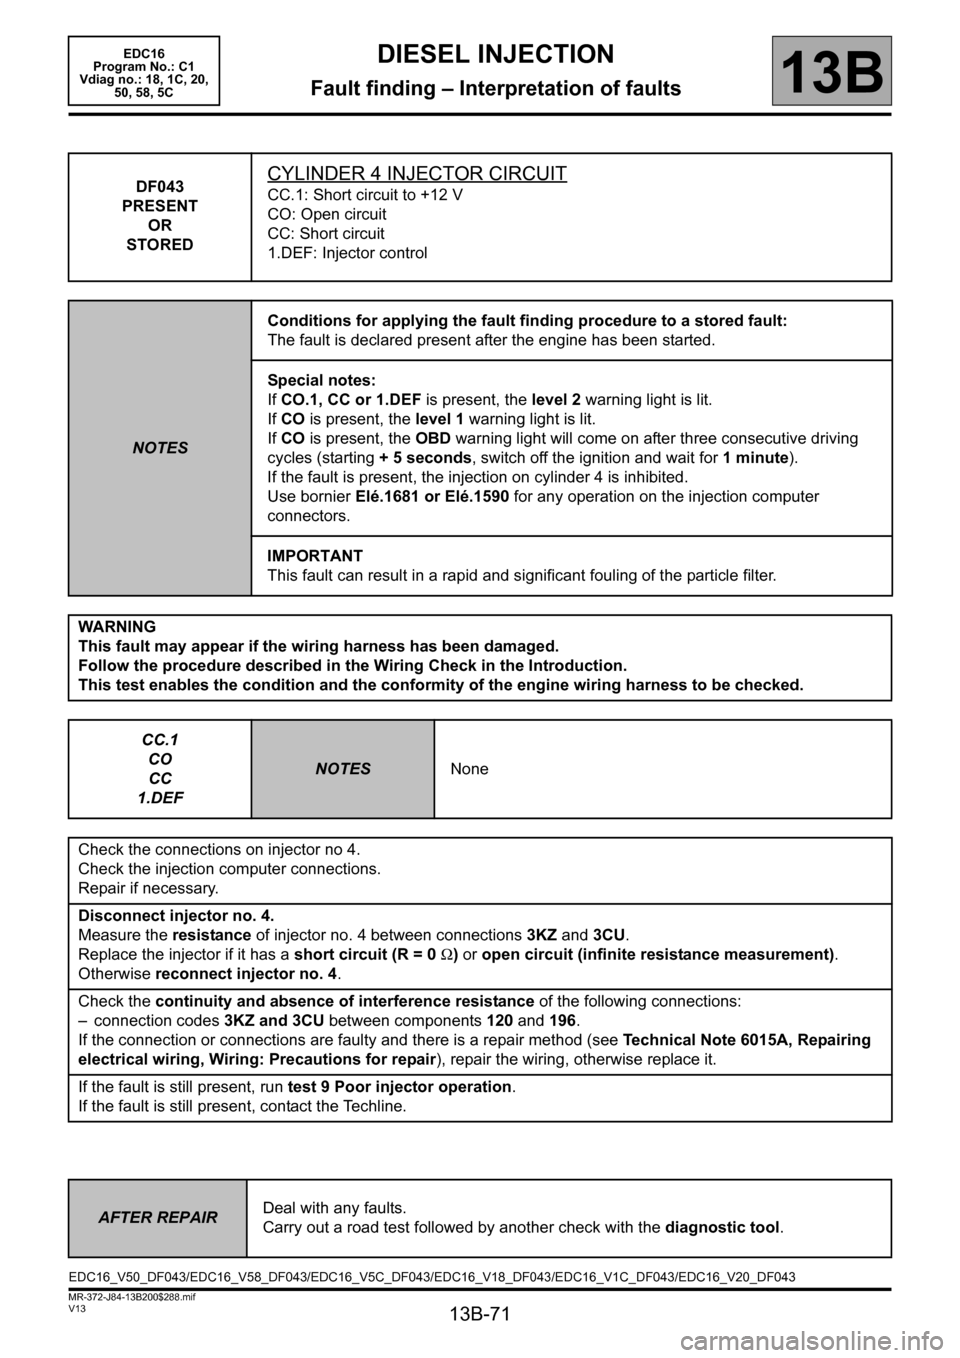 RENAULT SCENIC 2011 J95 / 3.G Engine And Peripherals EDC16 Manual PDF 13B-71
MR-372-J84-13B200$288.mif
V13
DIESEL INJECTION
Fault finding – Interpretation of faults
EDC16  
Program No.: C1 
Vdiag no.: 18, 1C, 20,  
50, 58, 5C
13B
DF043
PRESENT
OR
STOREDCYLINDER 4 INJE